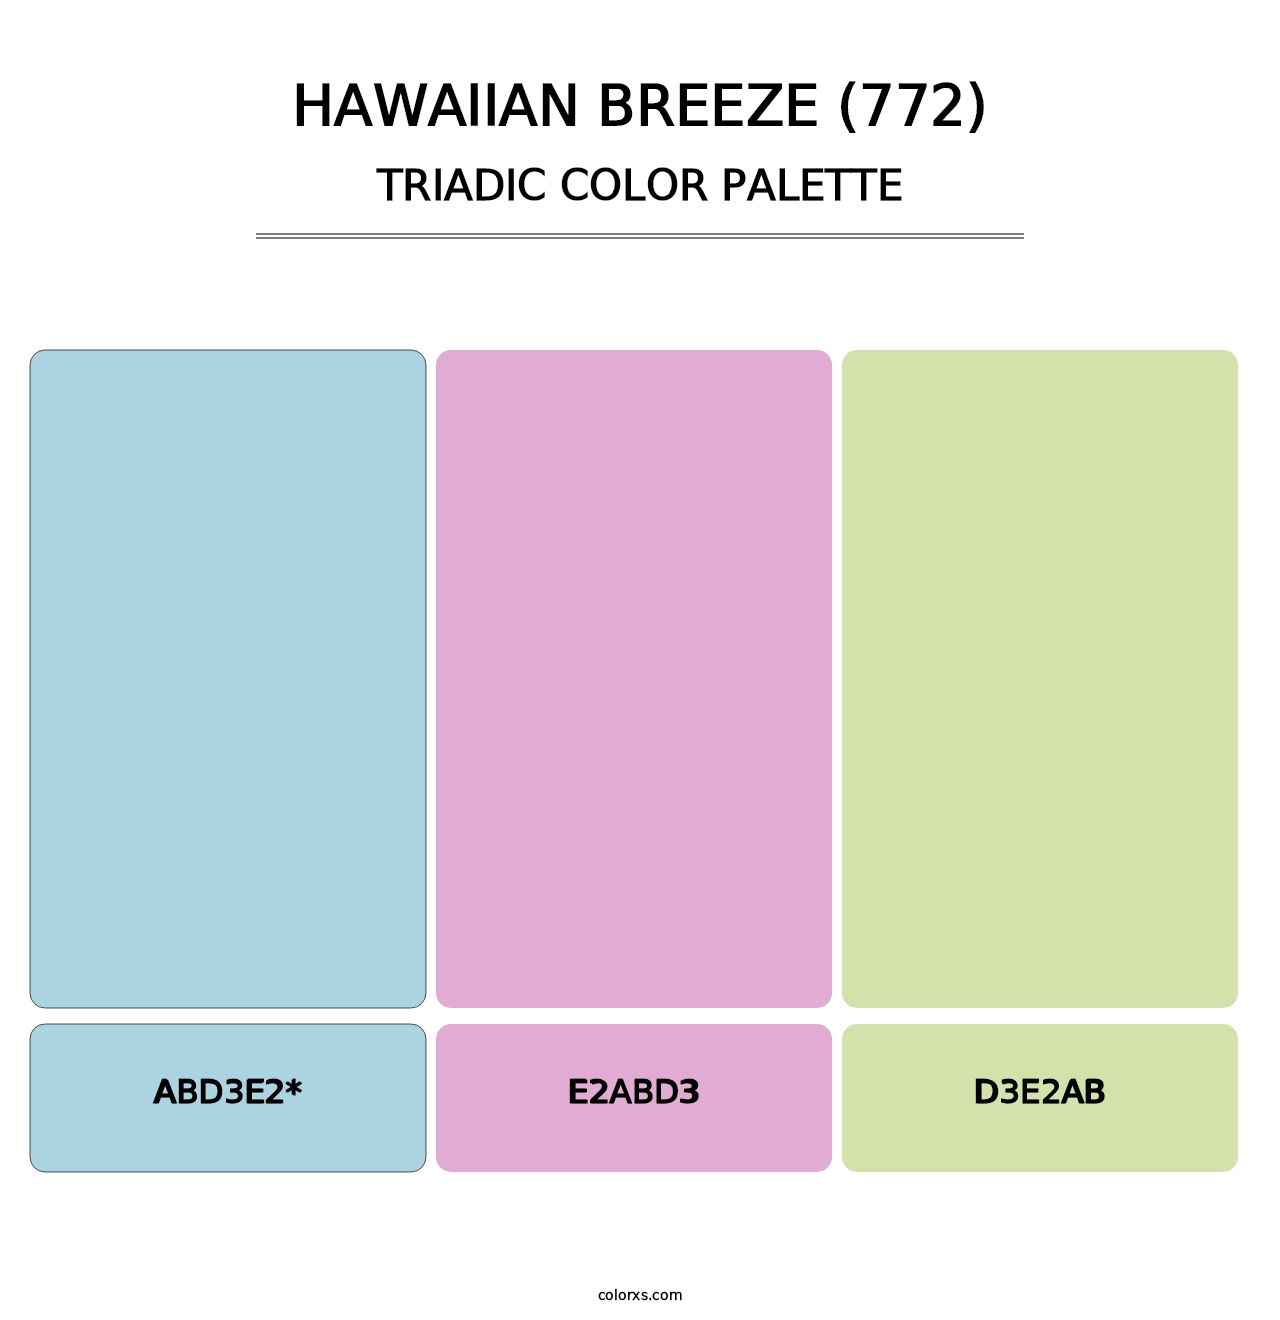 Hawaiian Breeze (772) - Triadic Color Palette